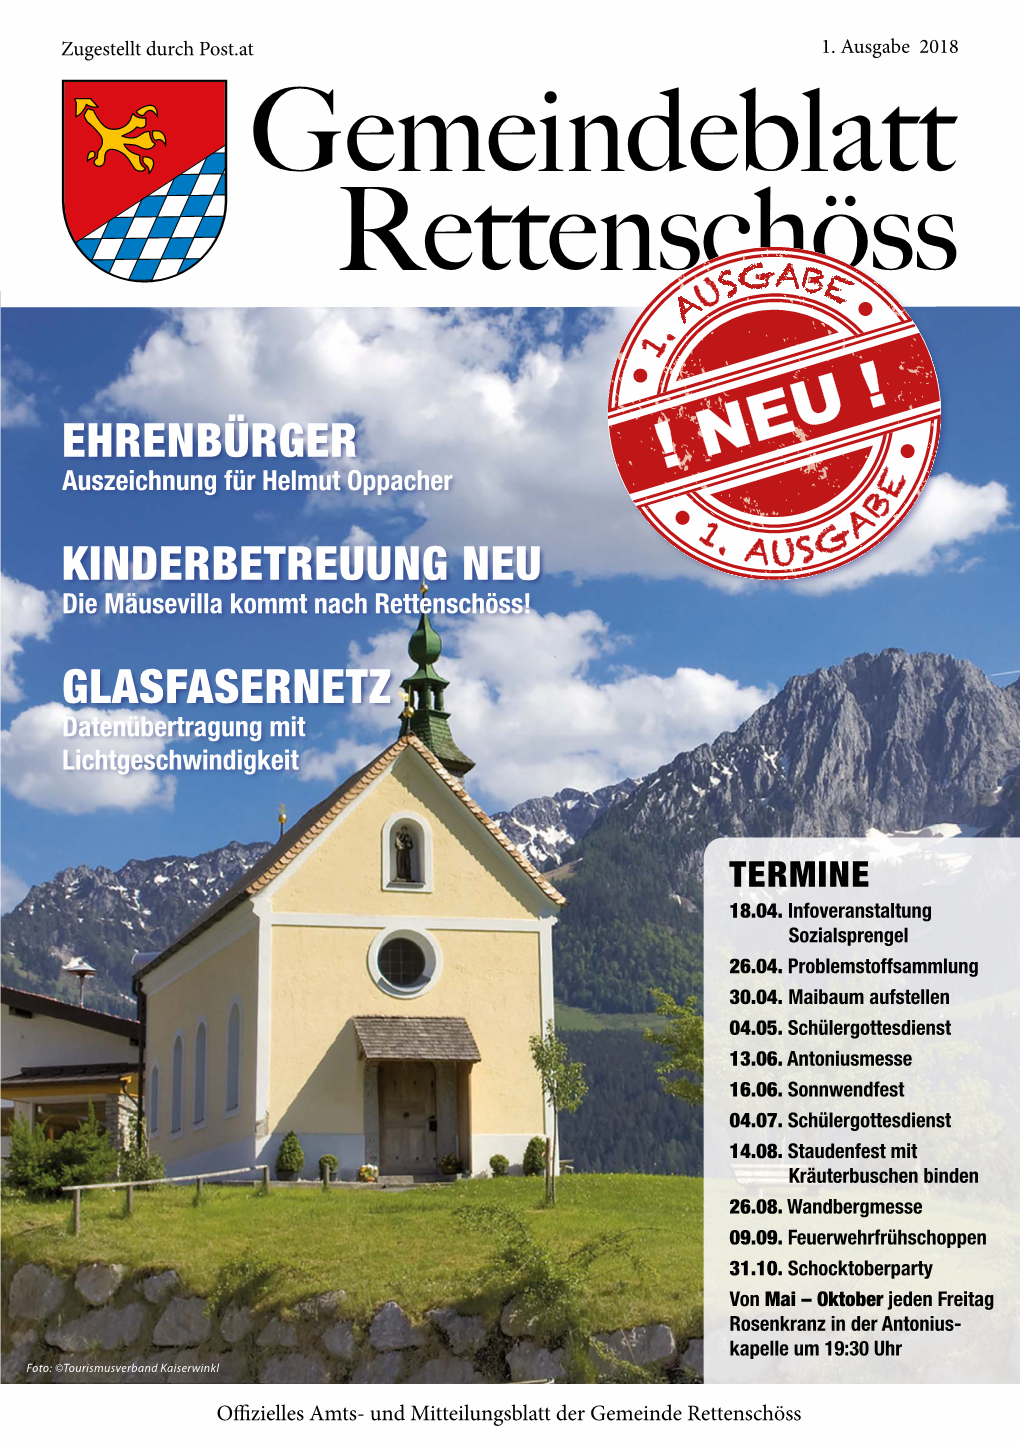 Gemeindeblatt Rettenschöss 1